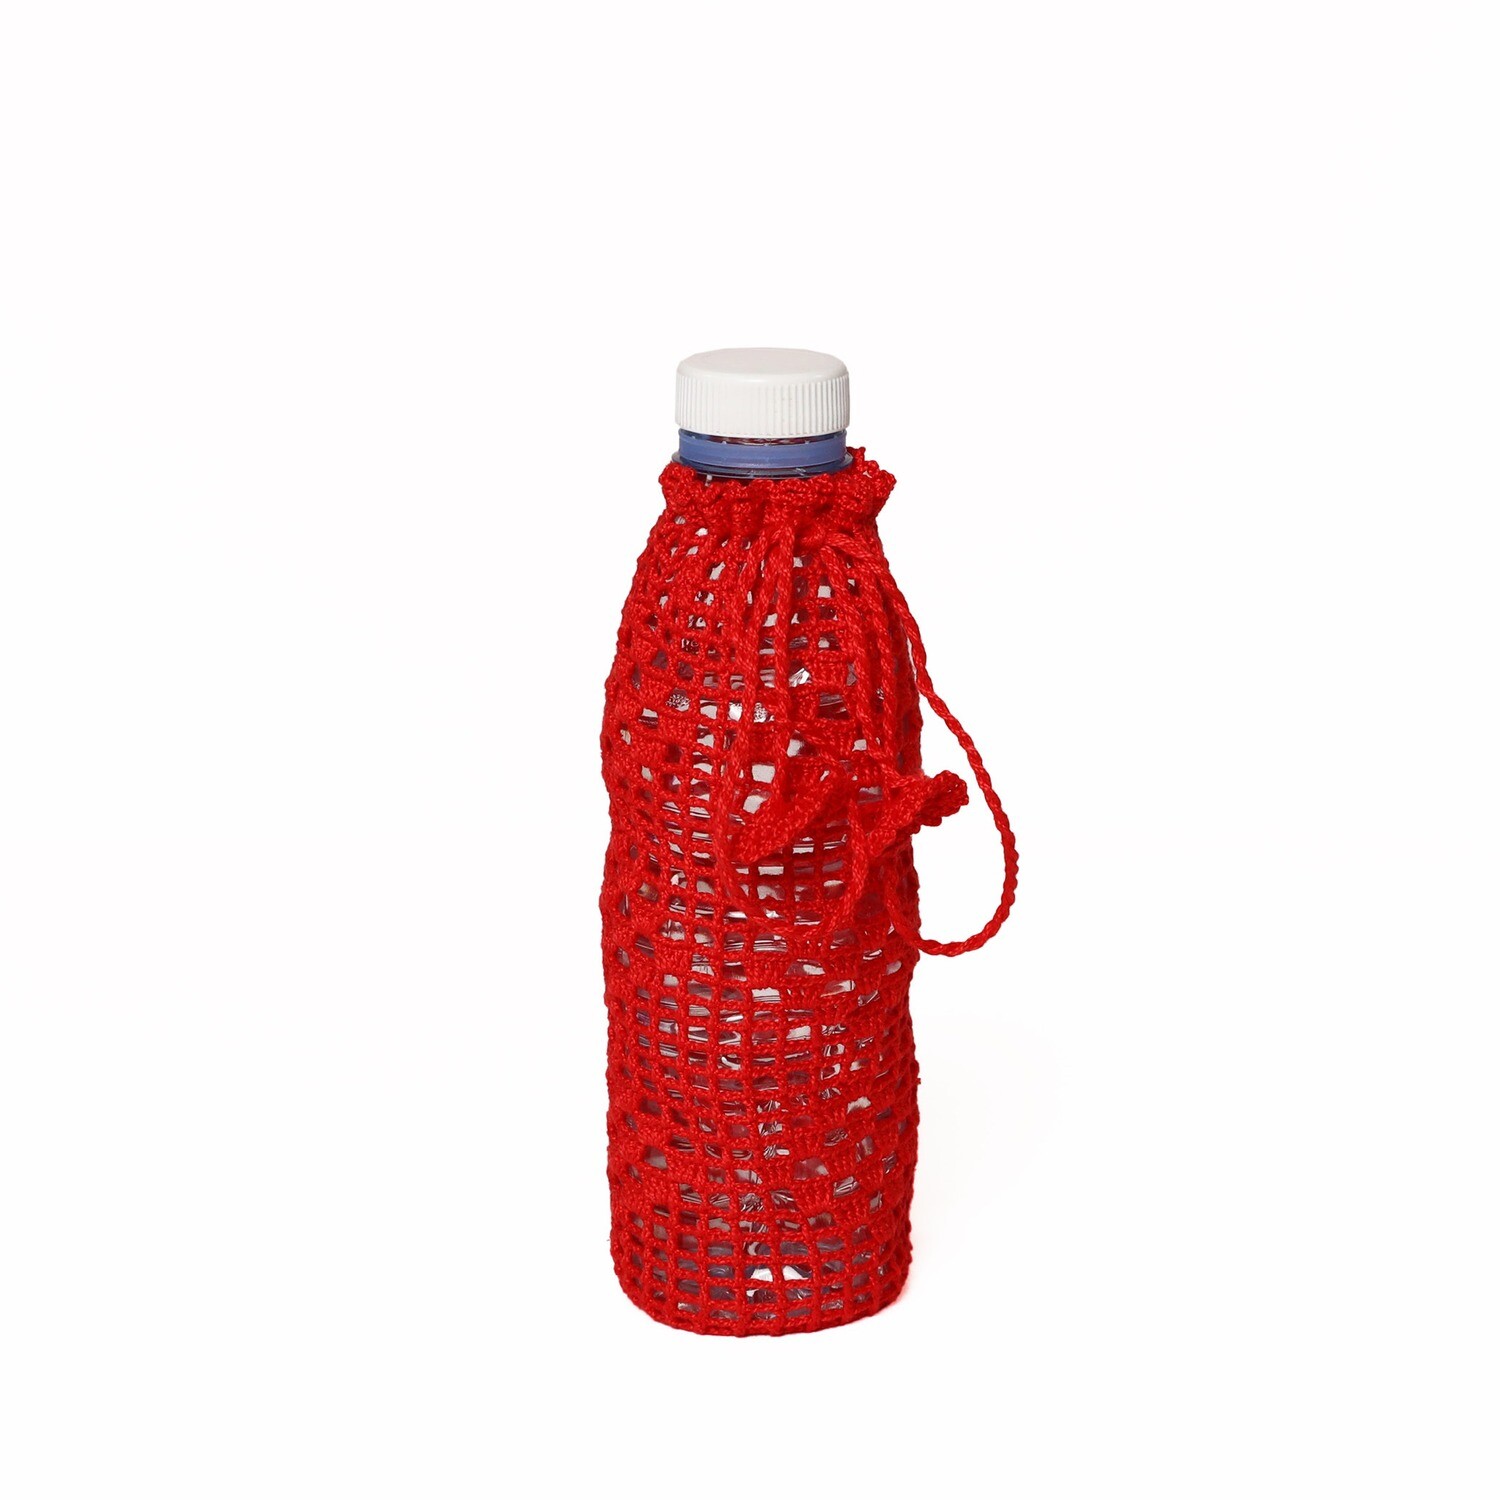 Crochet bottle cover - kounouz